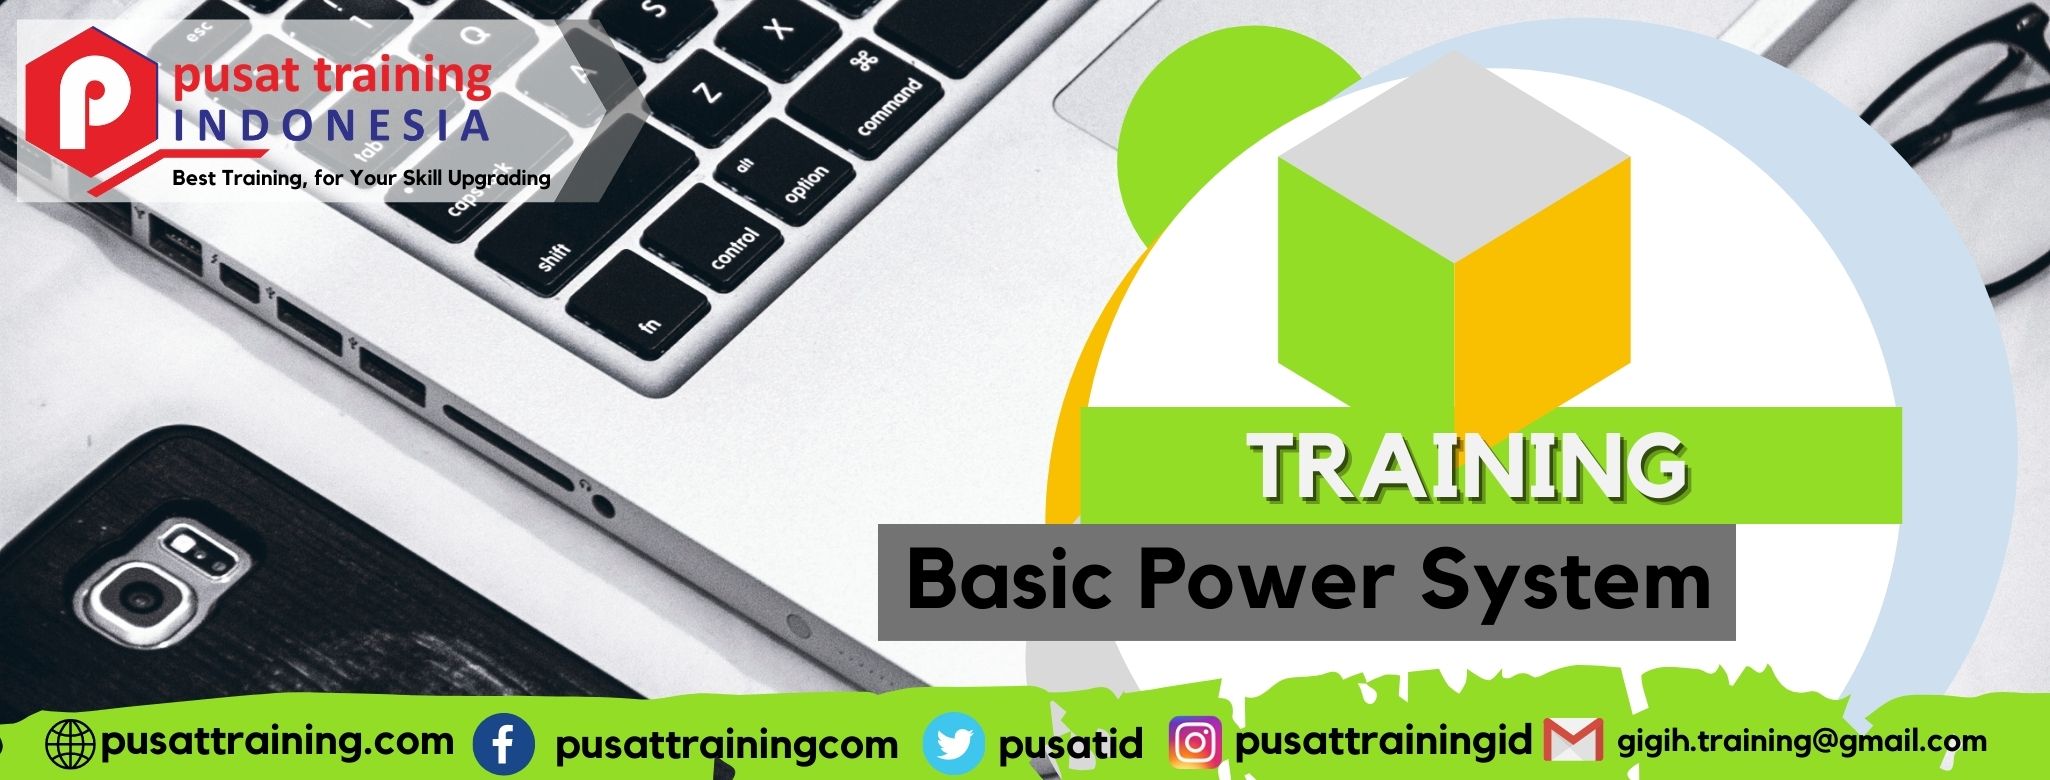 Training Basic Power System